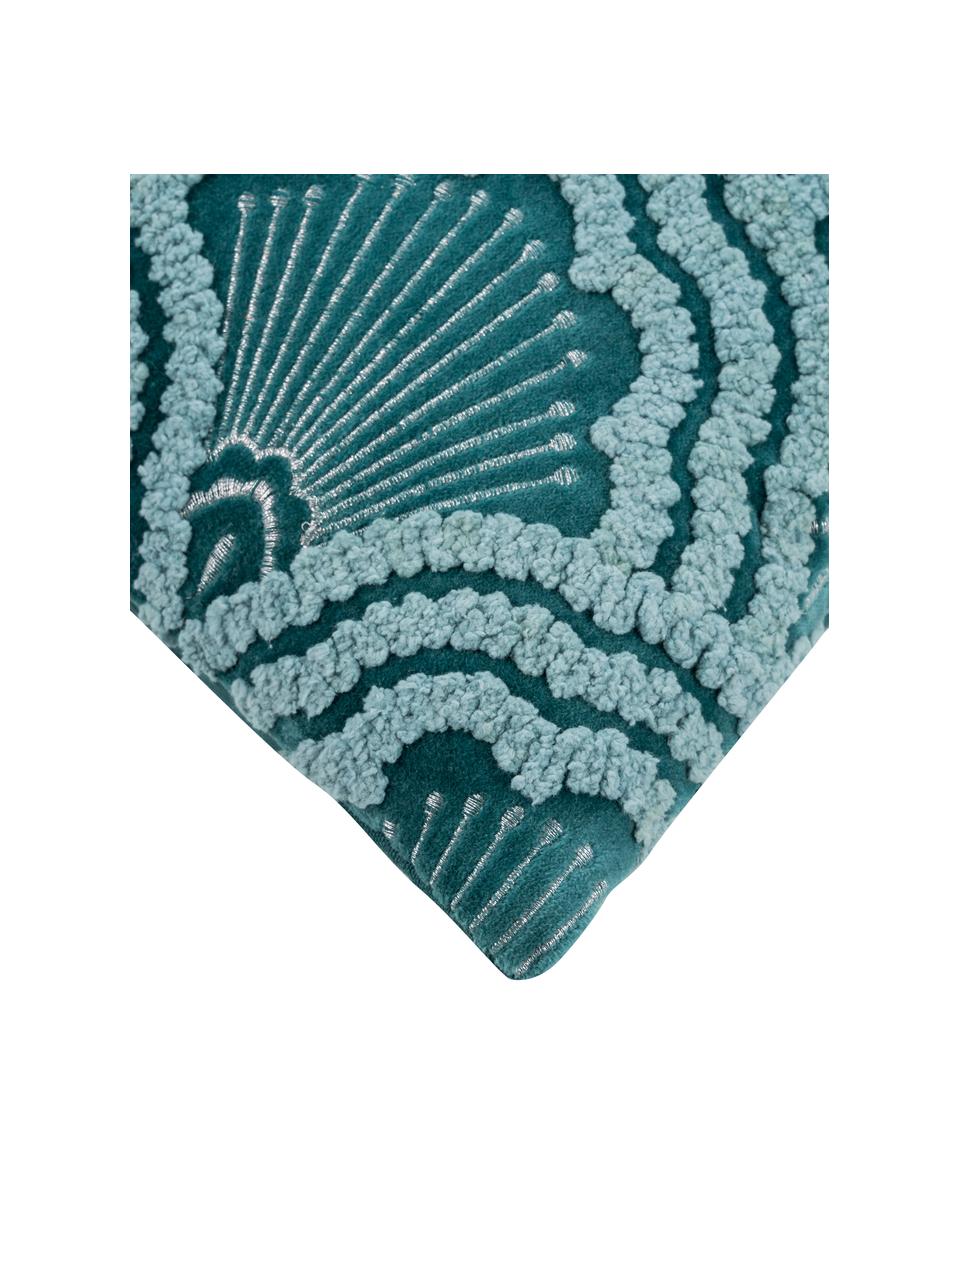 Geborduurde fluwelen kussenhoes Chelsey met hoog-laag patroon, 100% katoenfluweel, Petrolkleurig, 45 x 45 cm